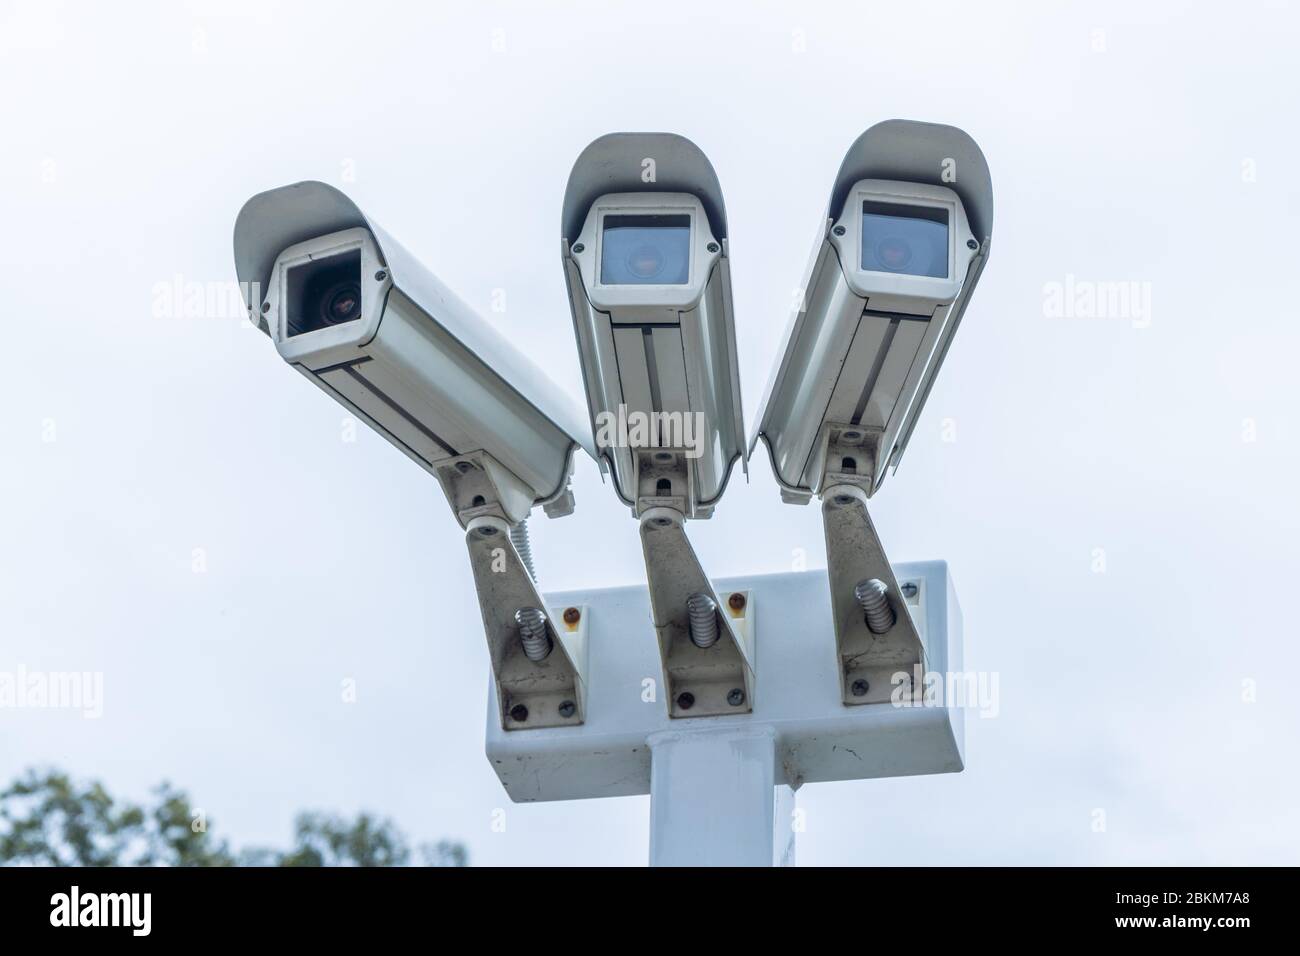 A set of three CCTV security cameras Stock Photo